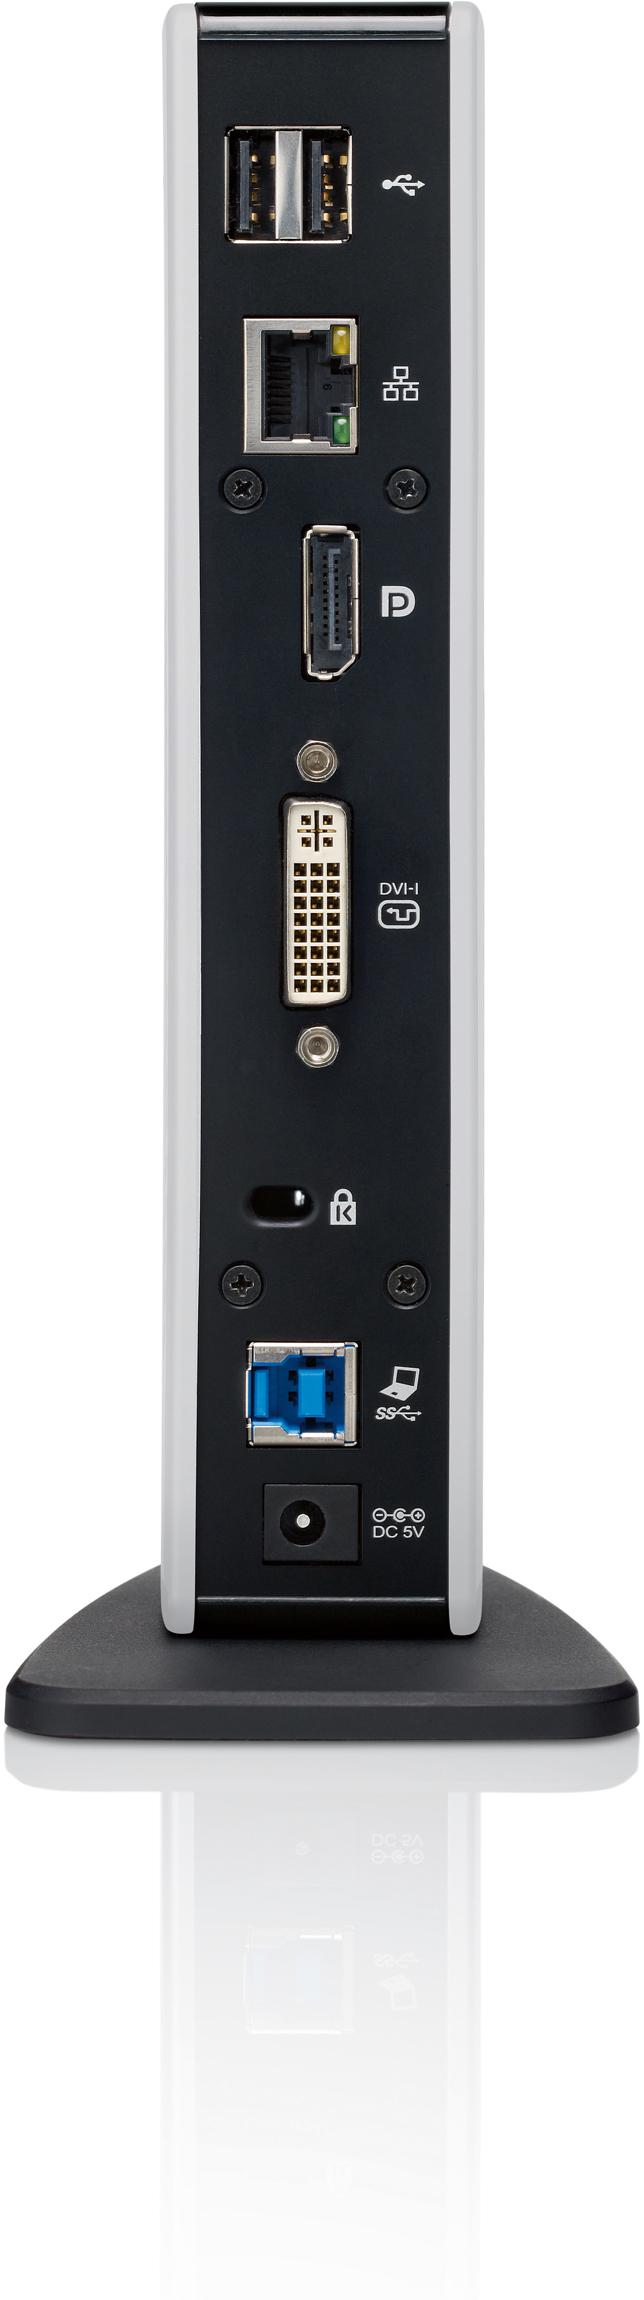 Fujitsu USB 3.0 Port Replicator PR08 USB 3.0 Portreplikator